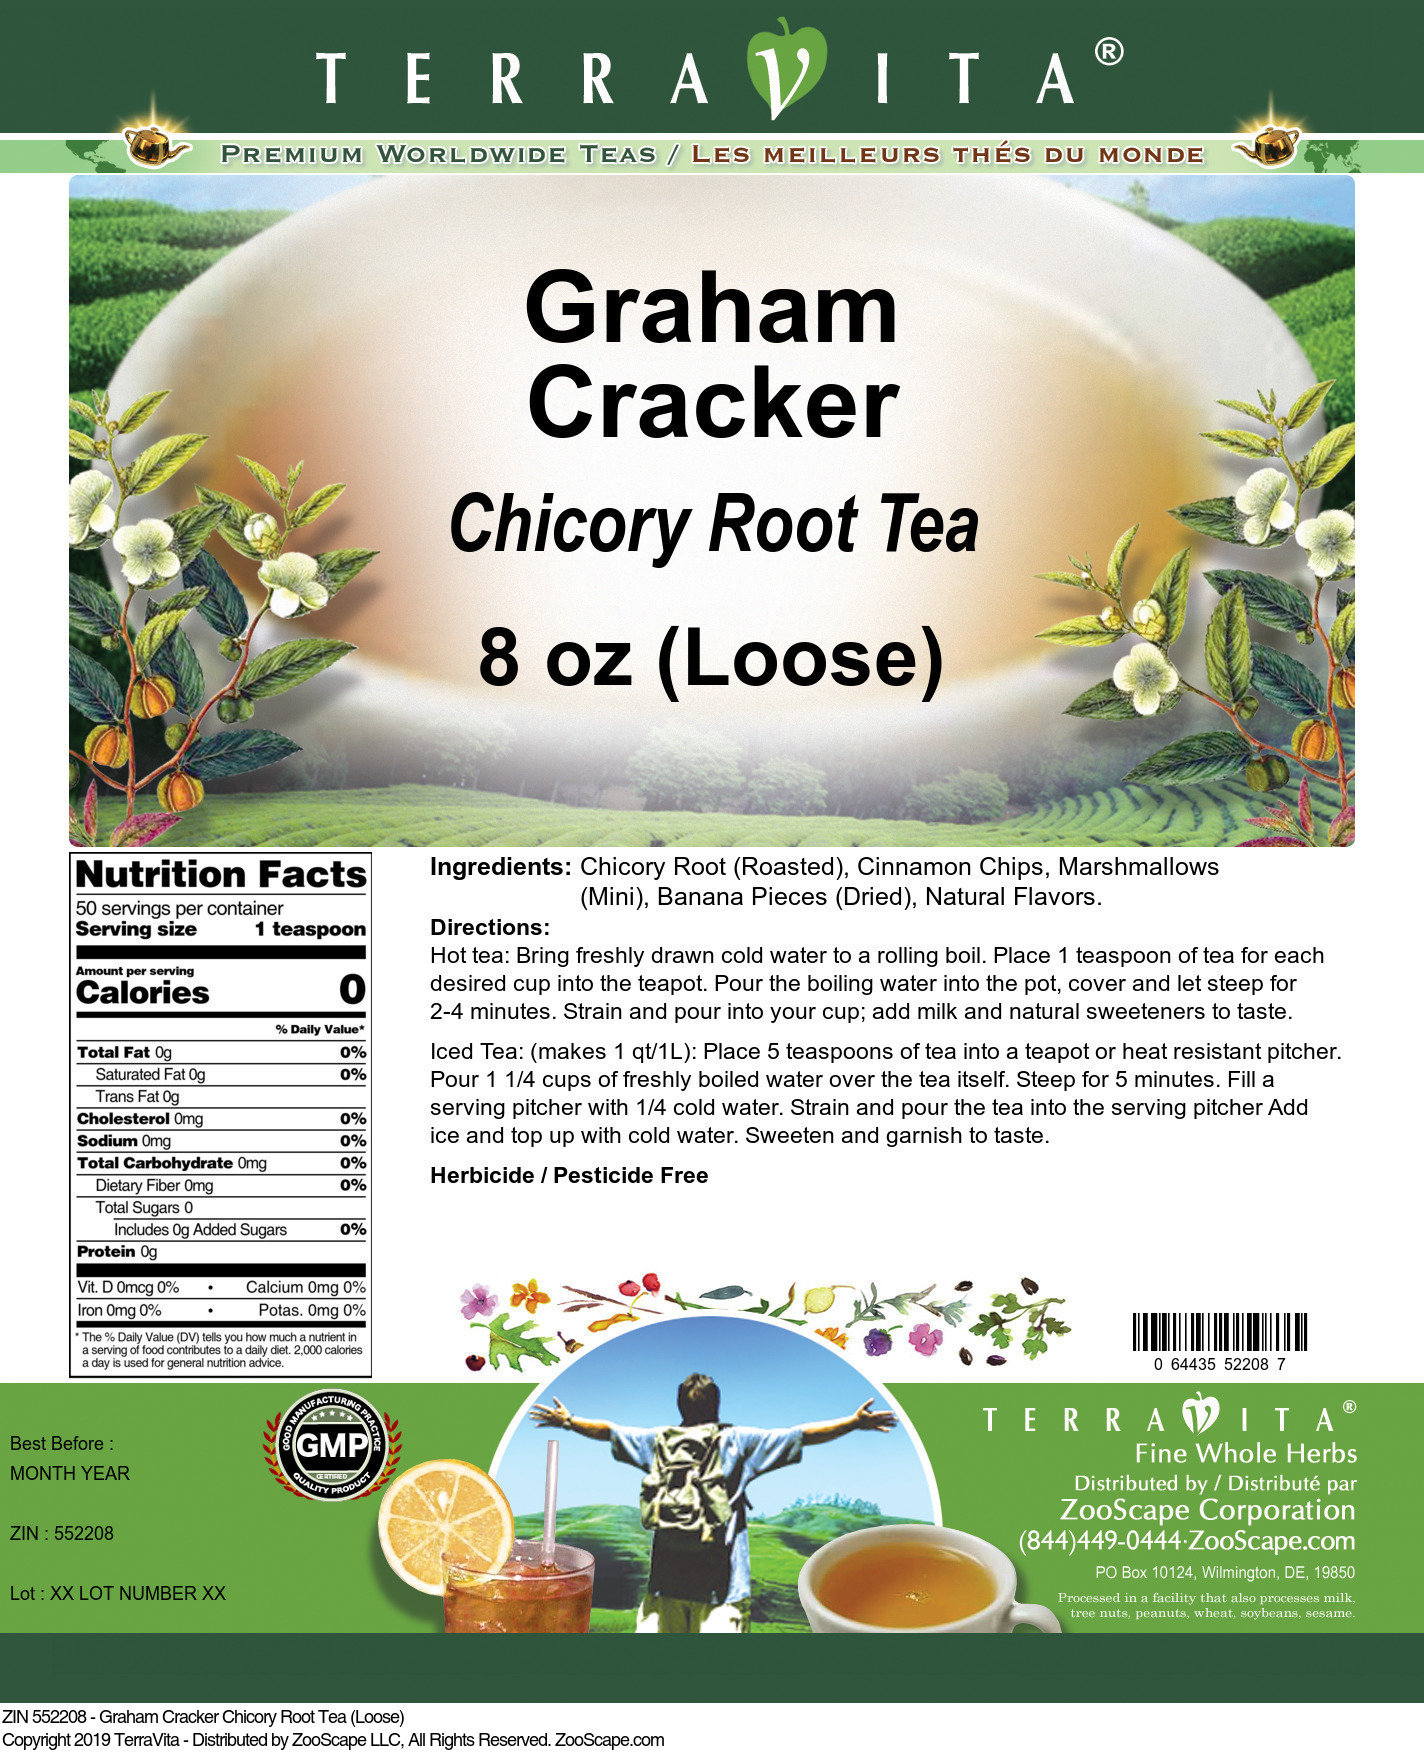 Graham Cracker Chicory Root Tea (Loose) - Label